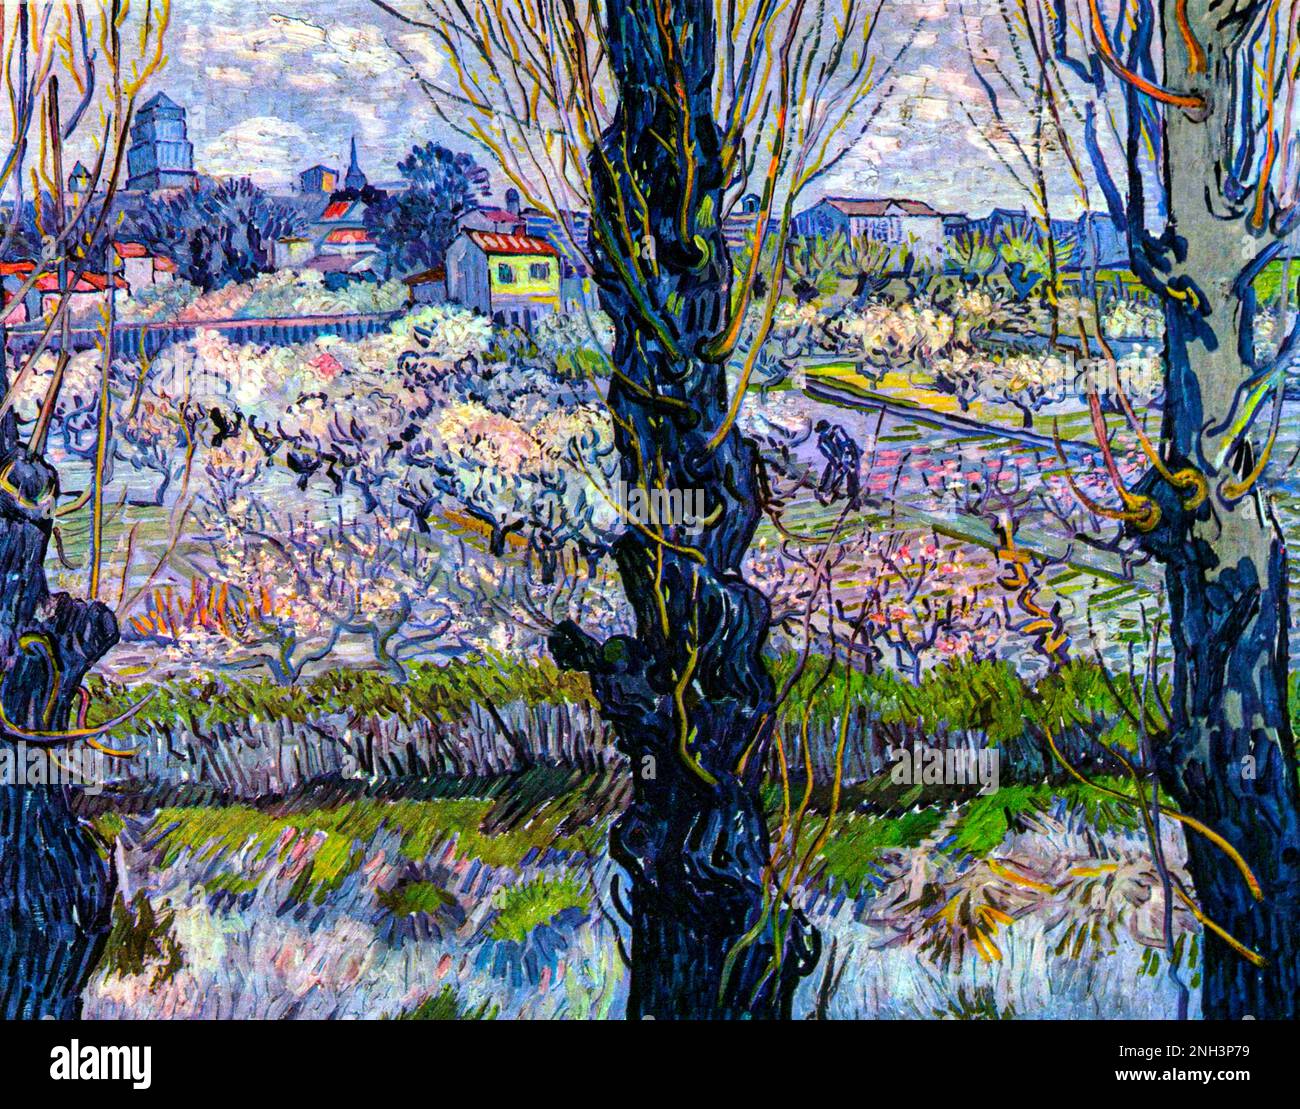 Vincent van Goghs Blick auf Arles, Blumenplantagen (1889), berühmte Landschaftsmalerei. Original aus Wikimedia Commons. Stockfoto